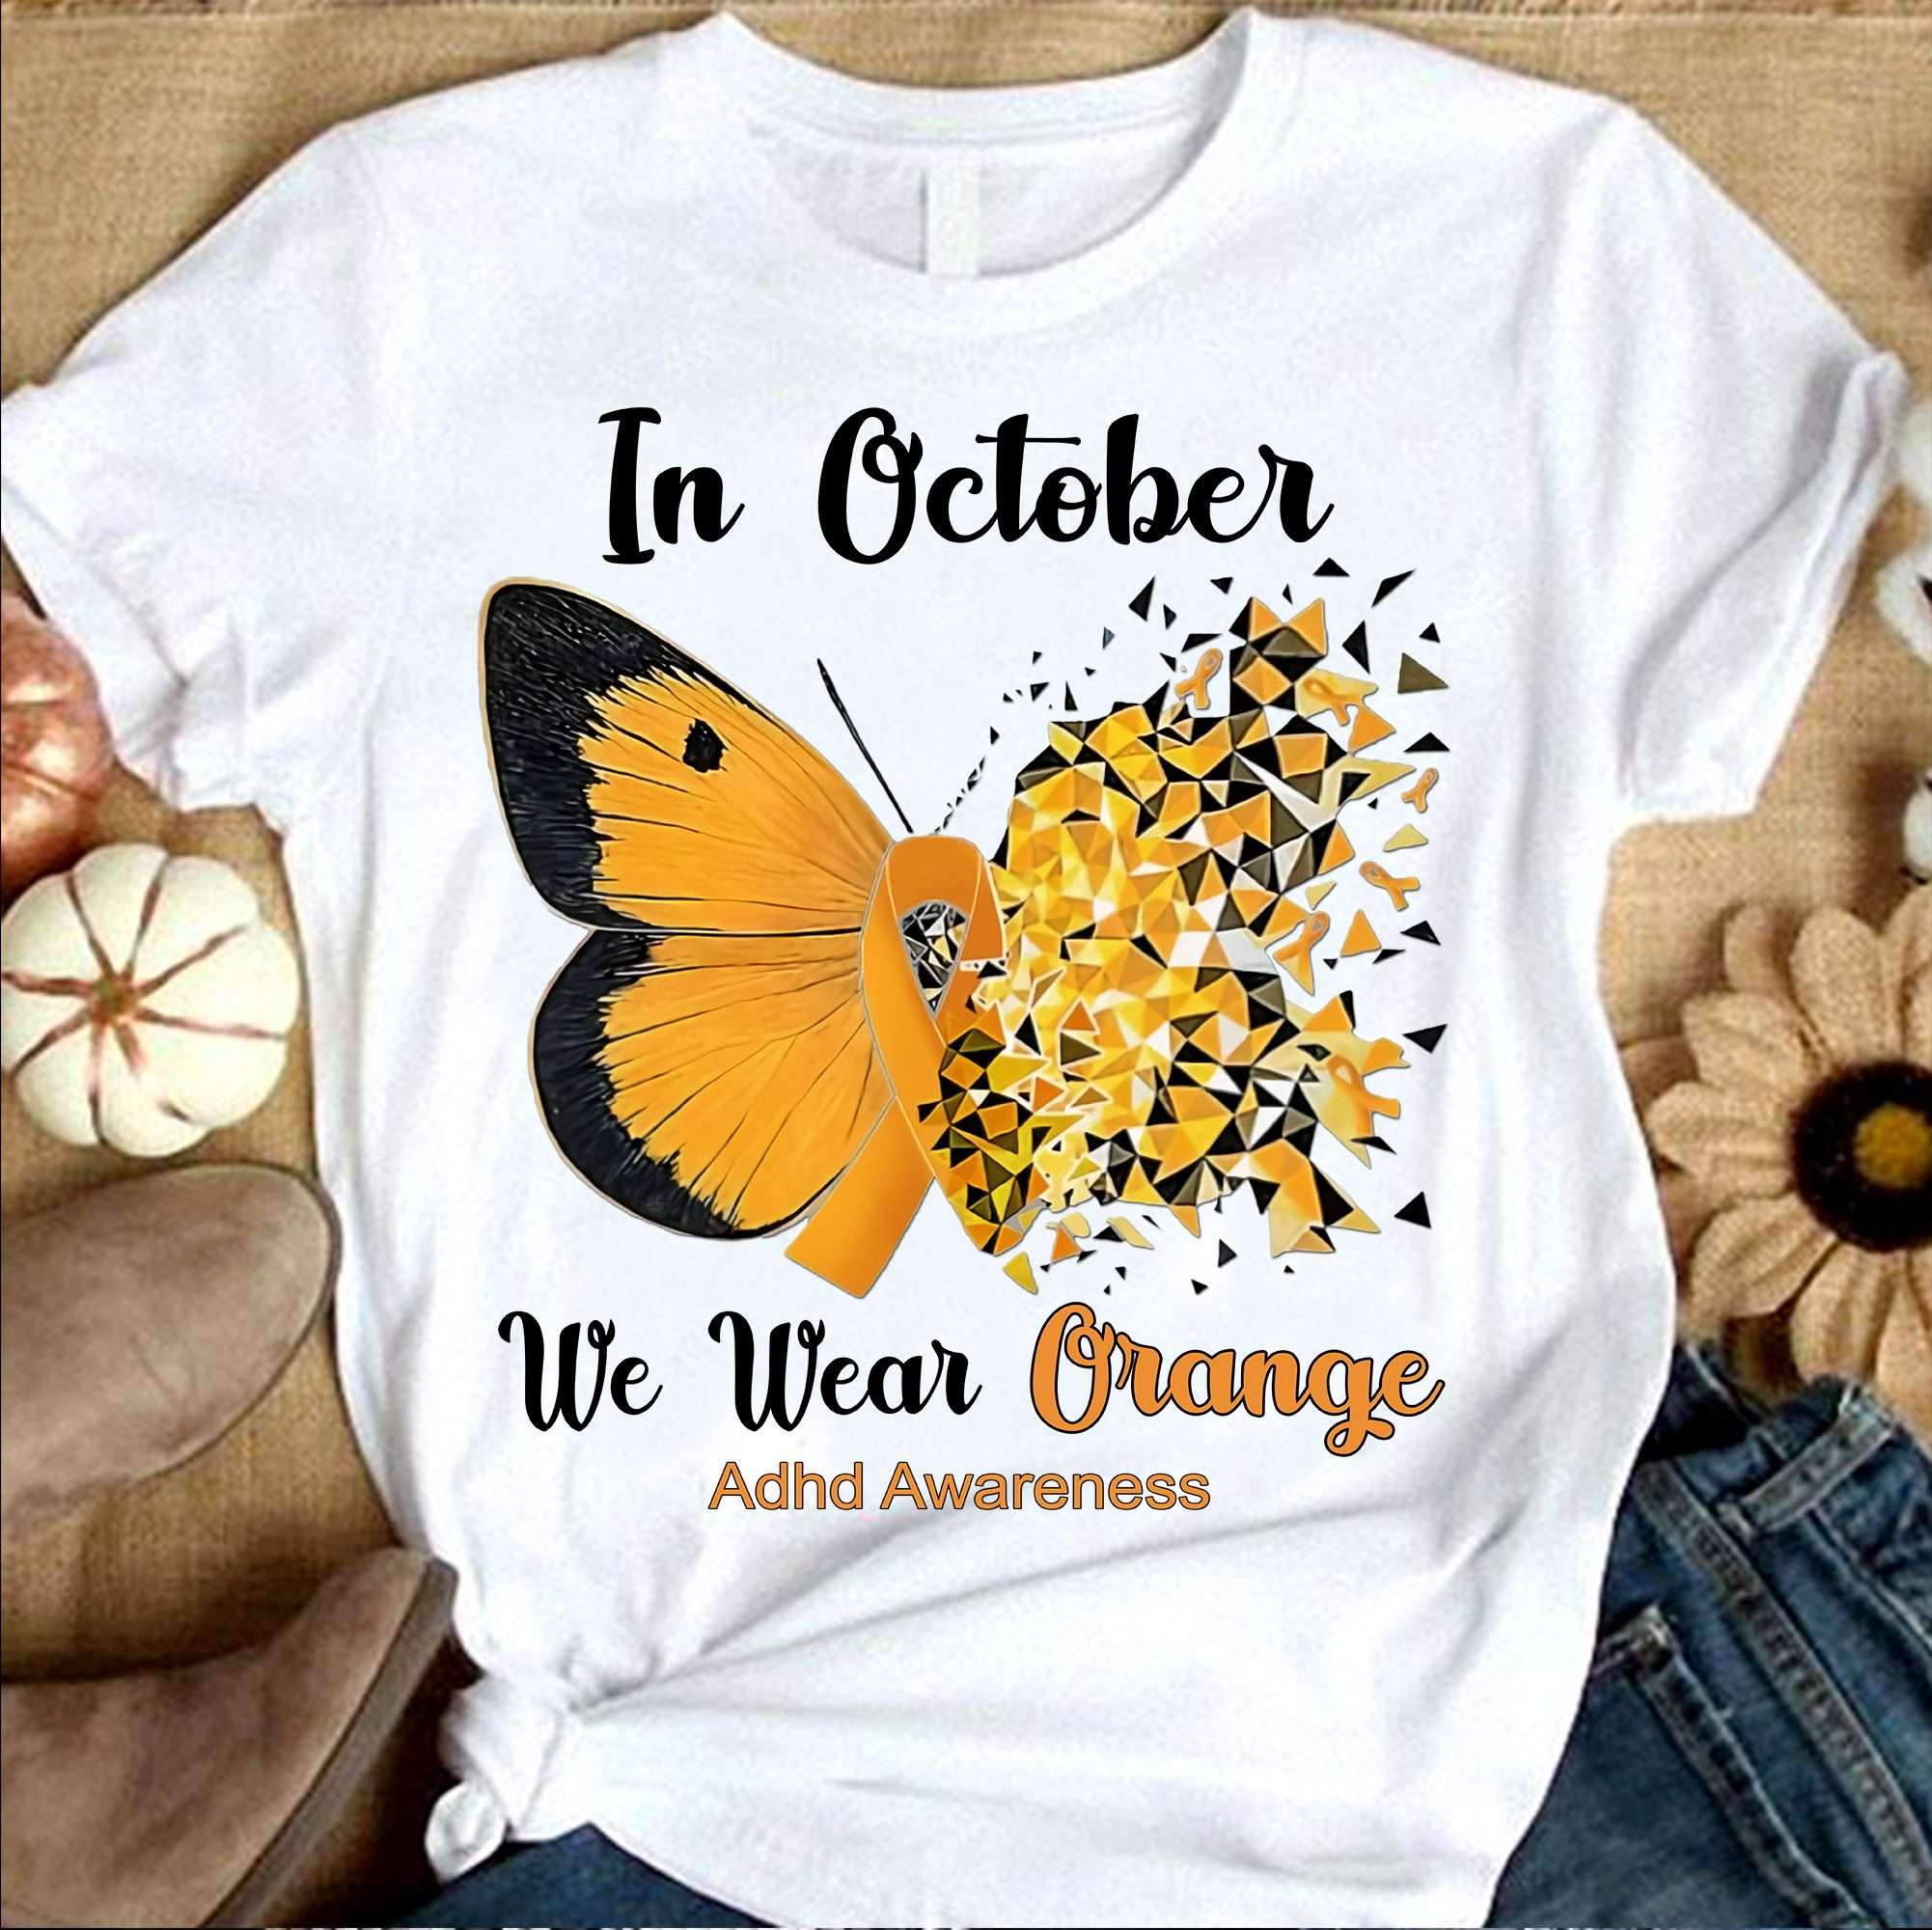 In october we wear orange - Adhd awareness, orange butterfly ribbon